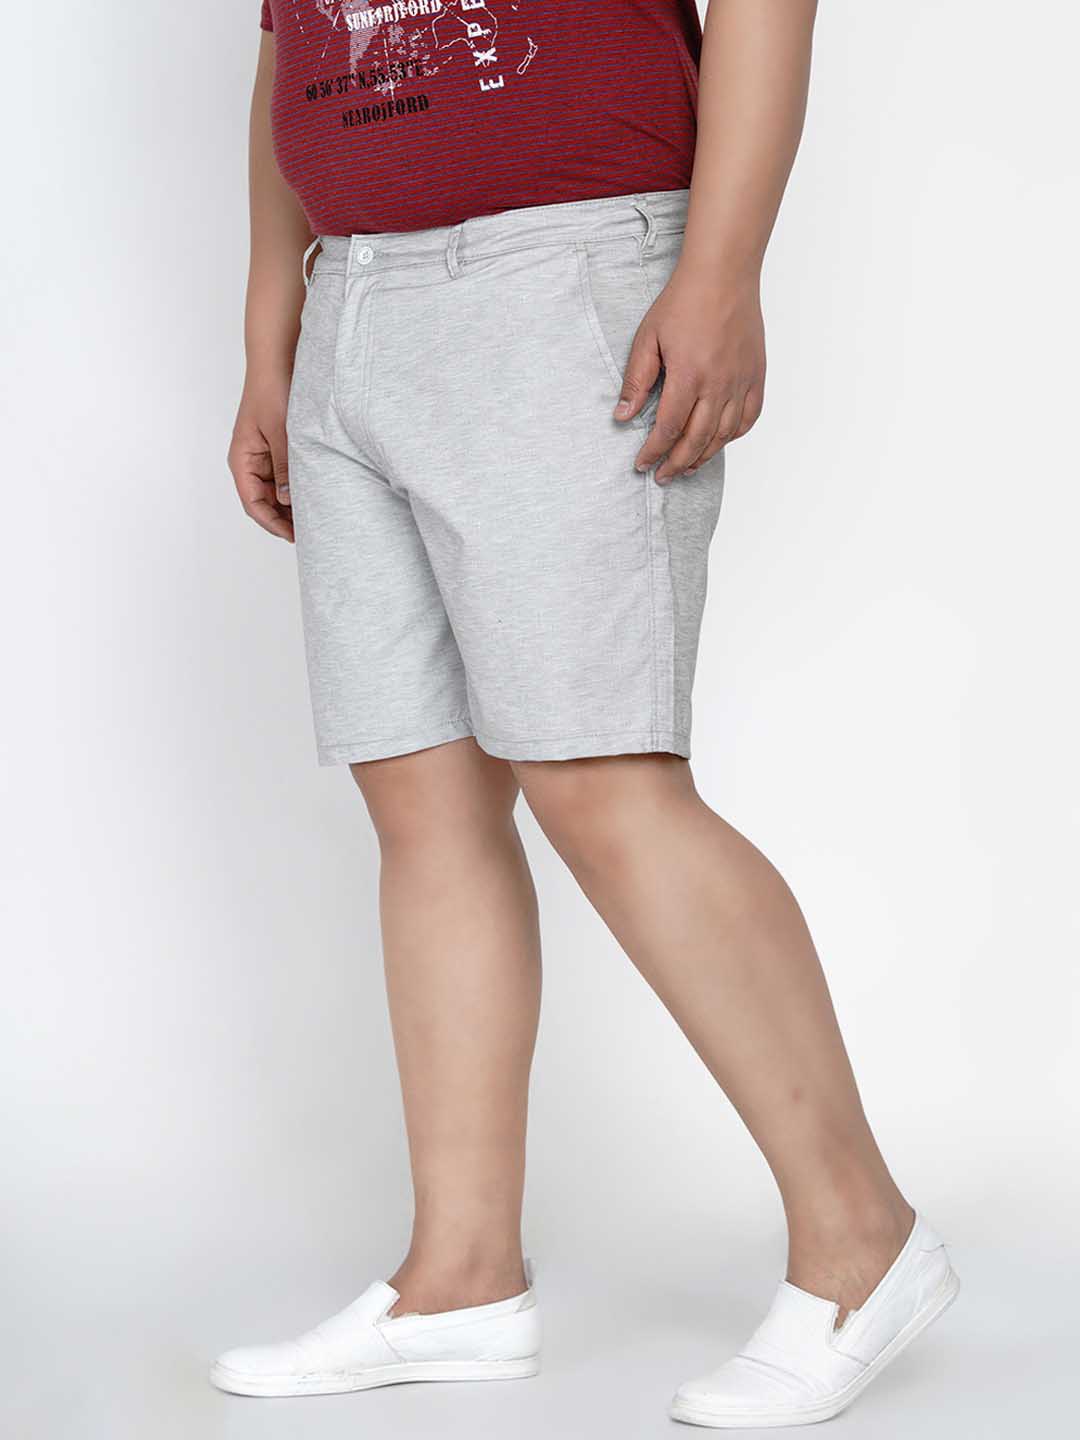 bottomwear/caprishorts/JPSO12015A/jpso12015a-6.jpg